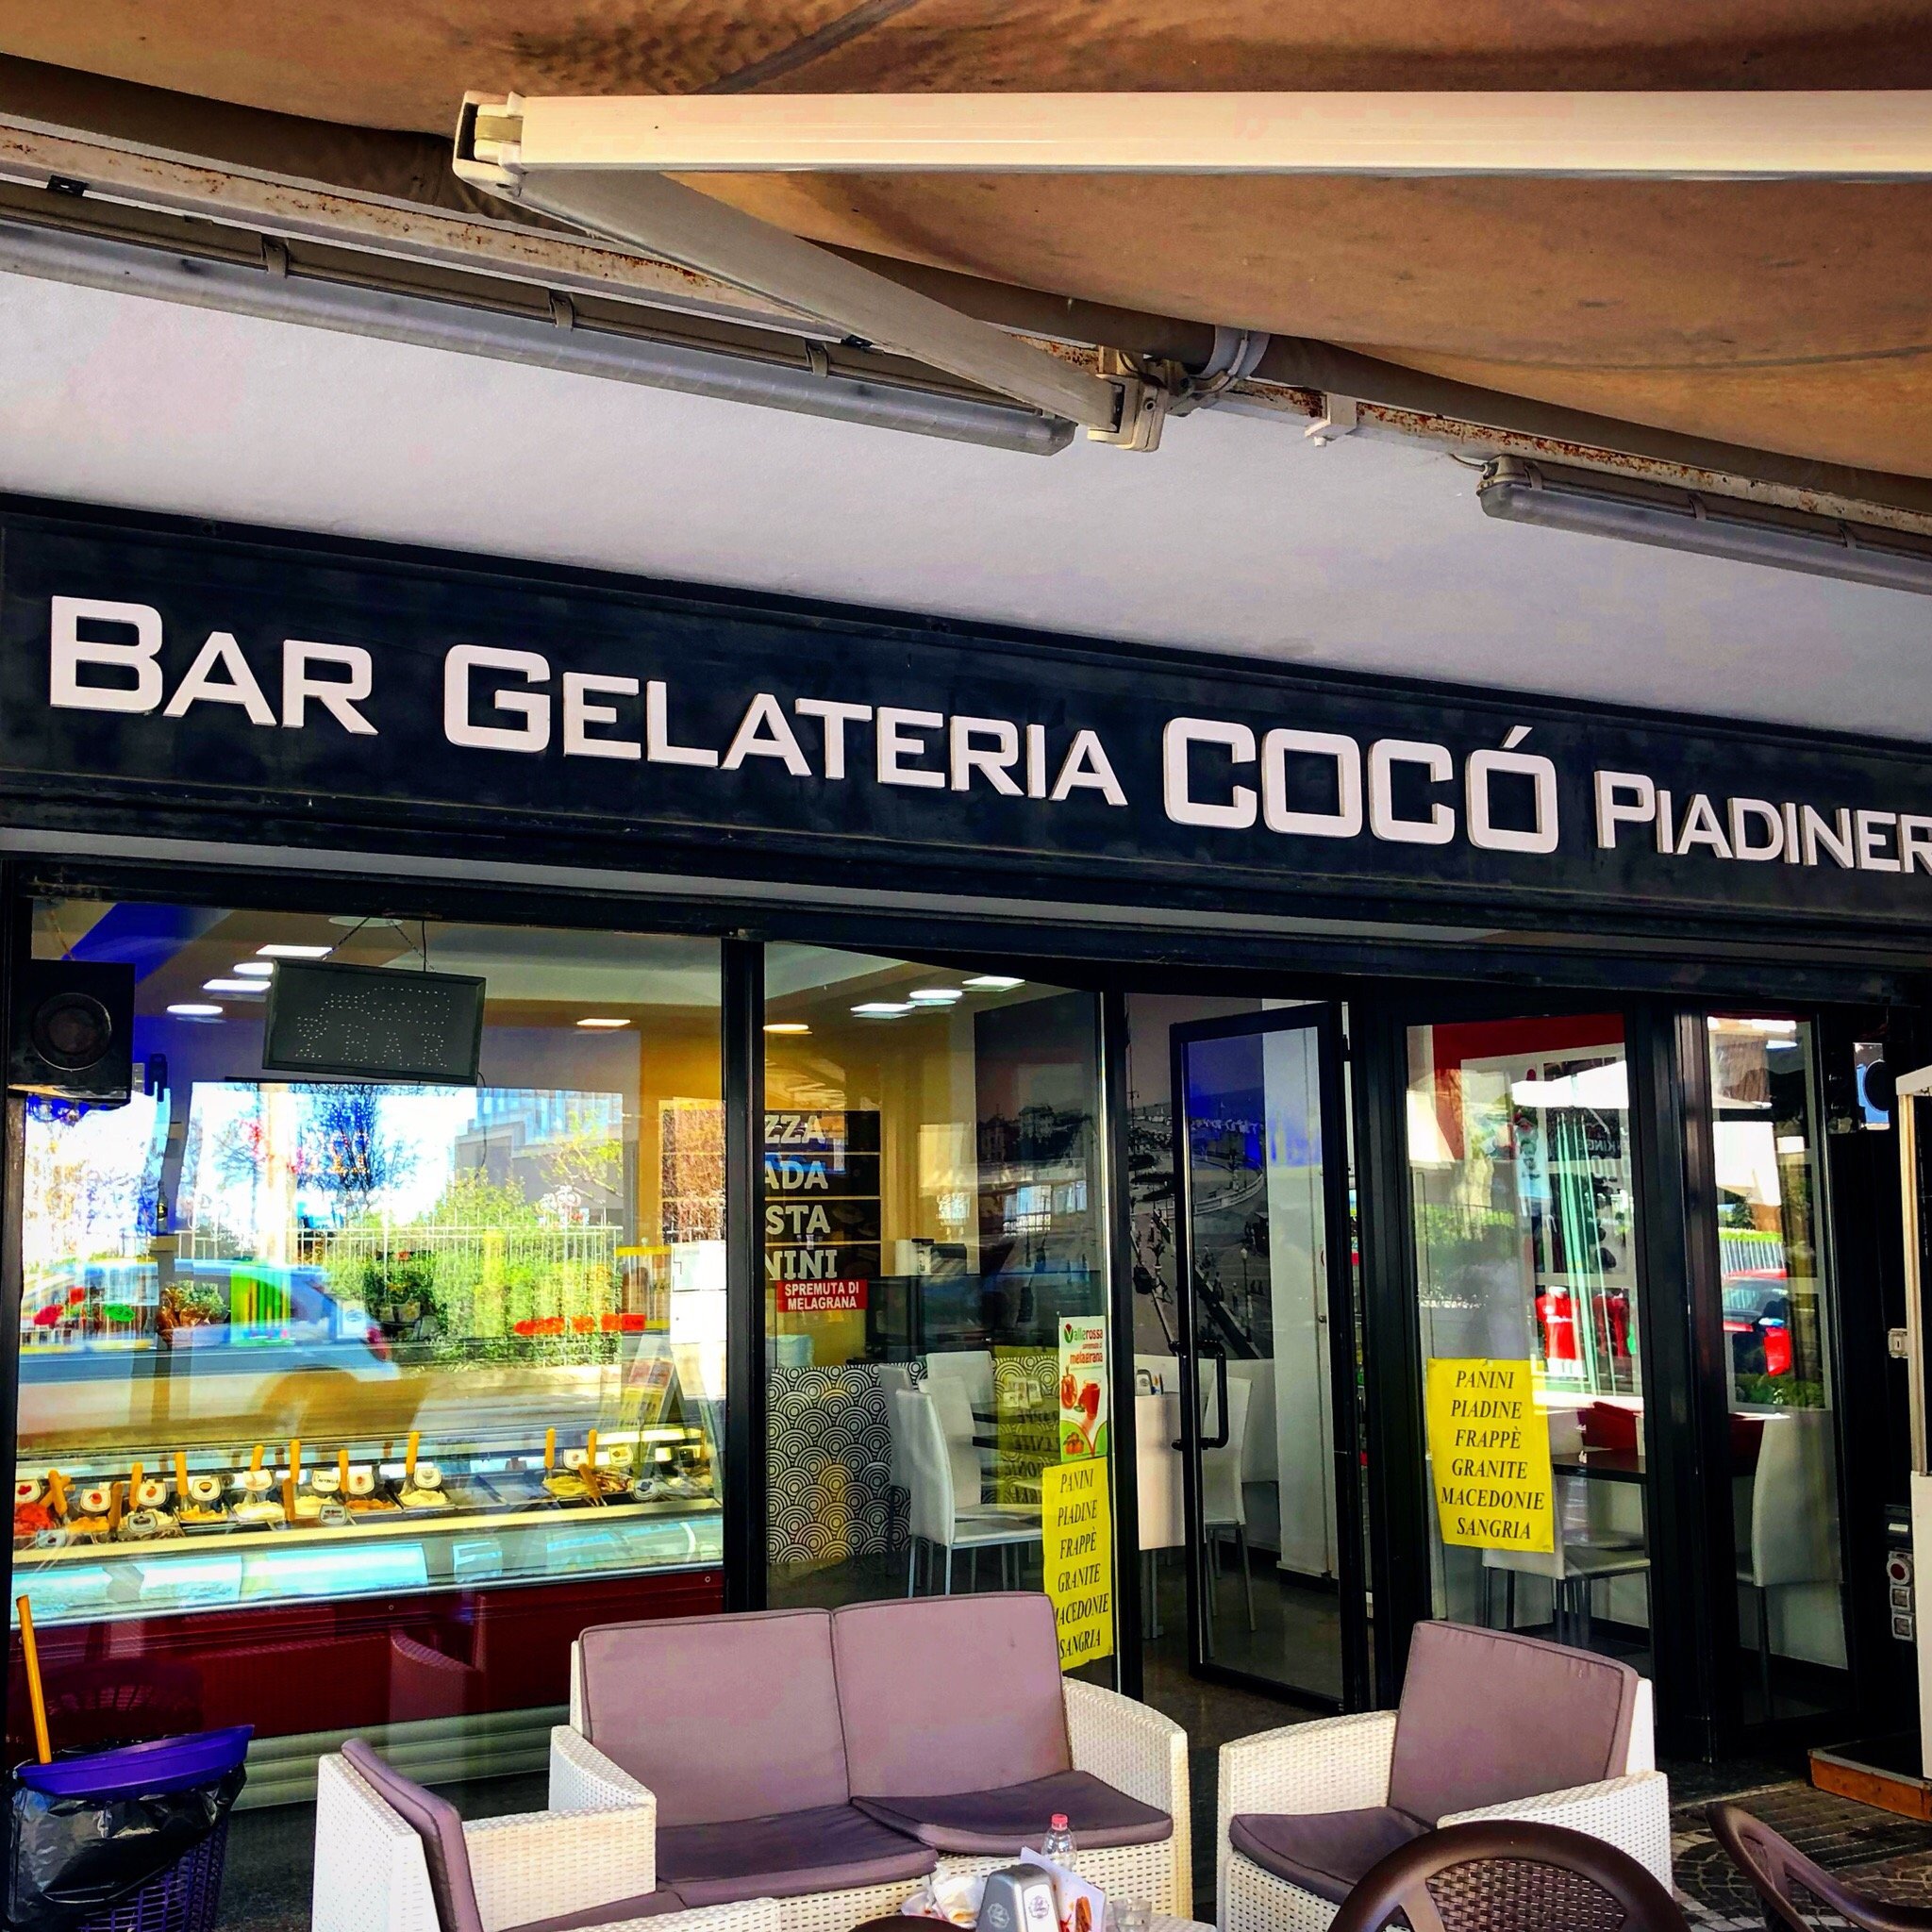 Bar Gelateria Piadineria Coco', Rimini